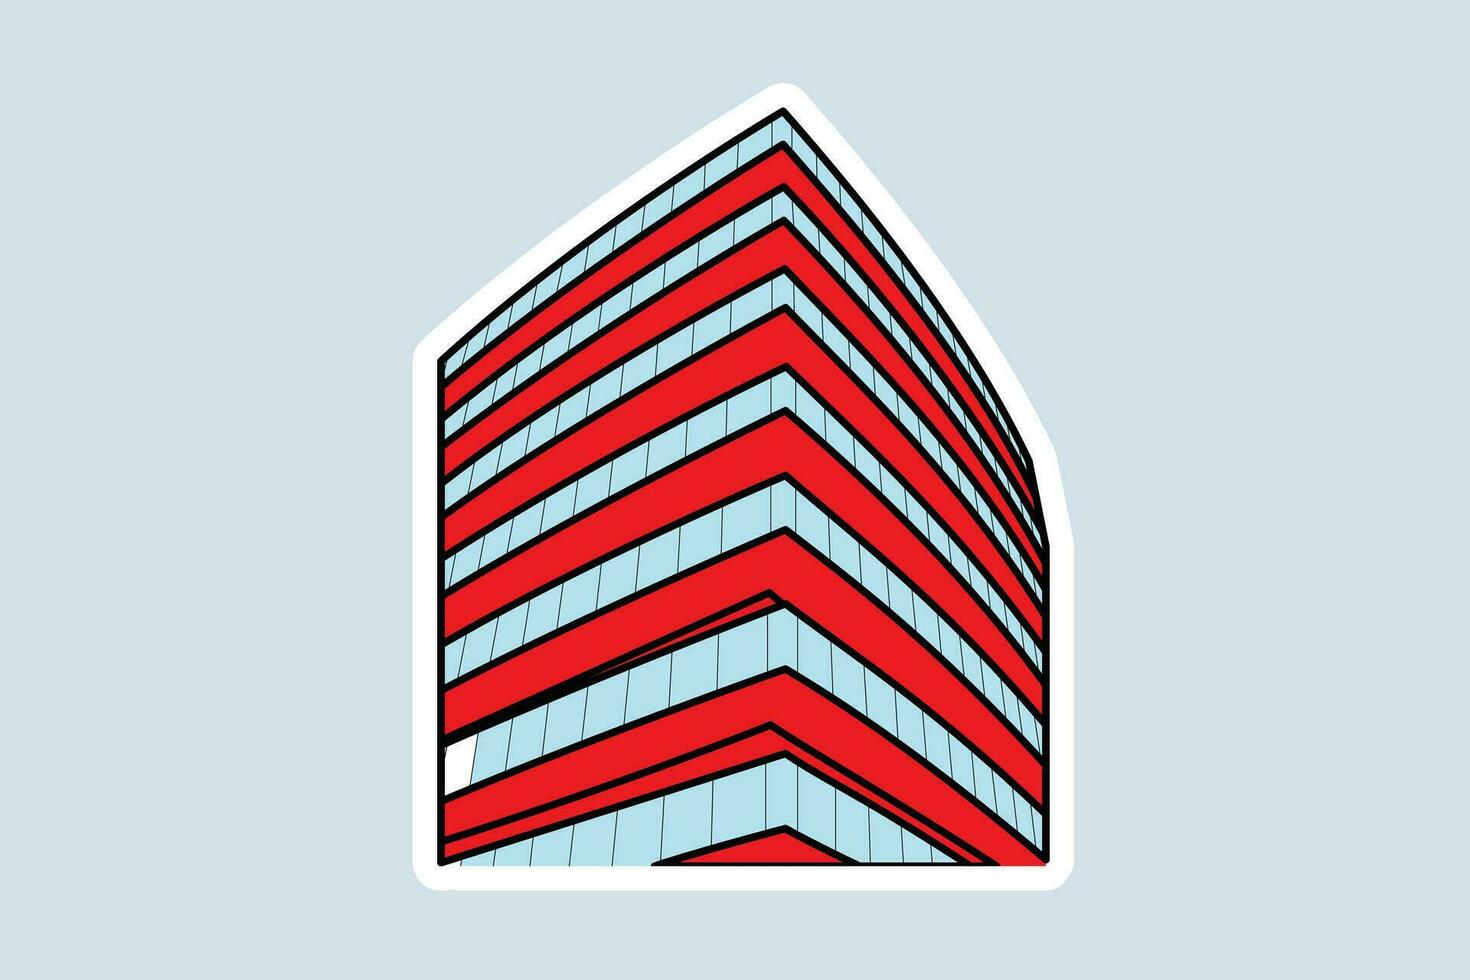 Building Skyscraper in Cityscape Sticker design vector illustration. Building and landmark object icon concept. Company buildings in flat style sticker design logo.